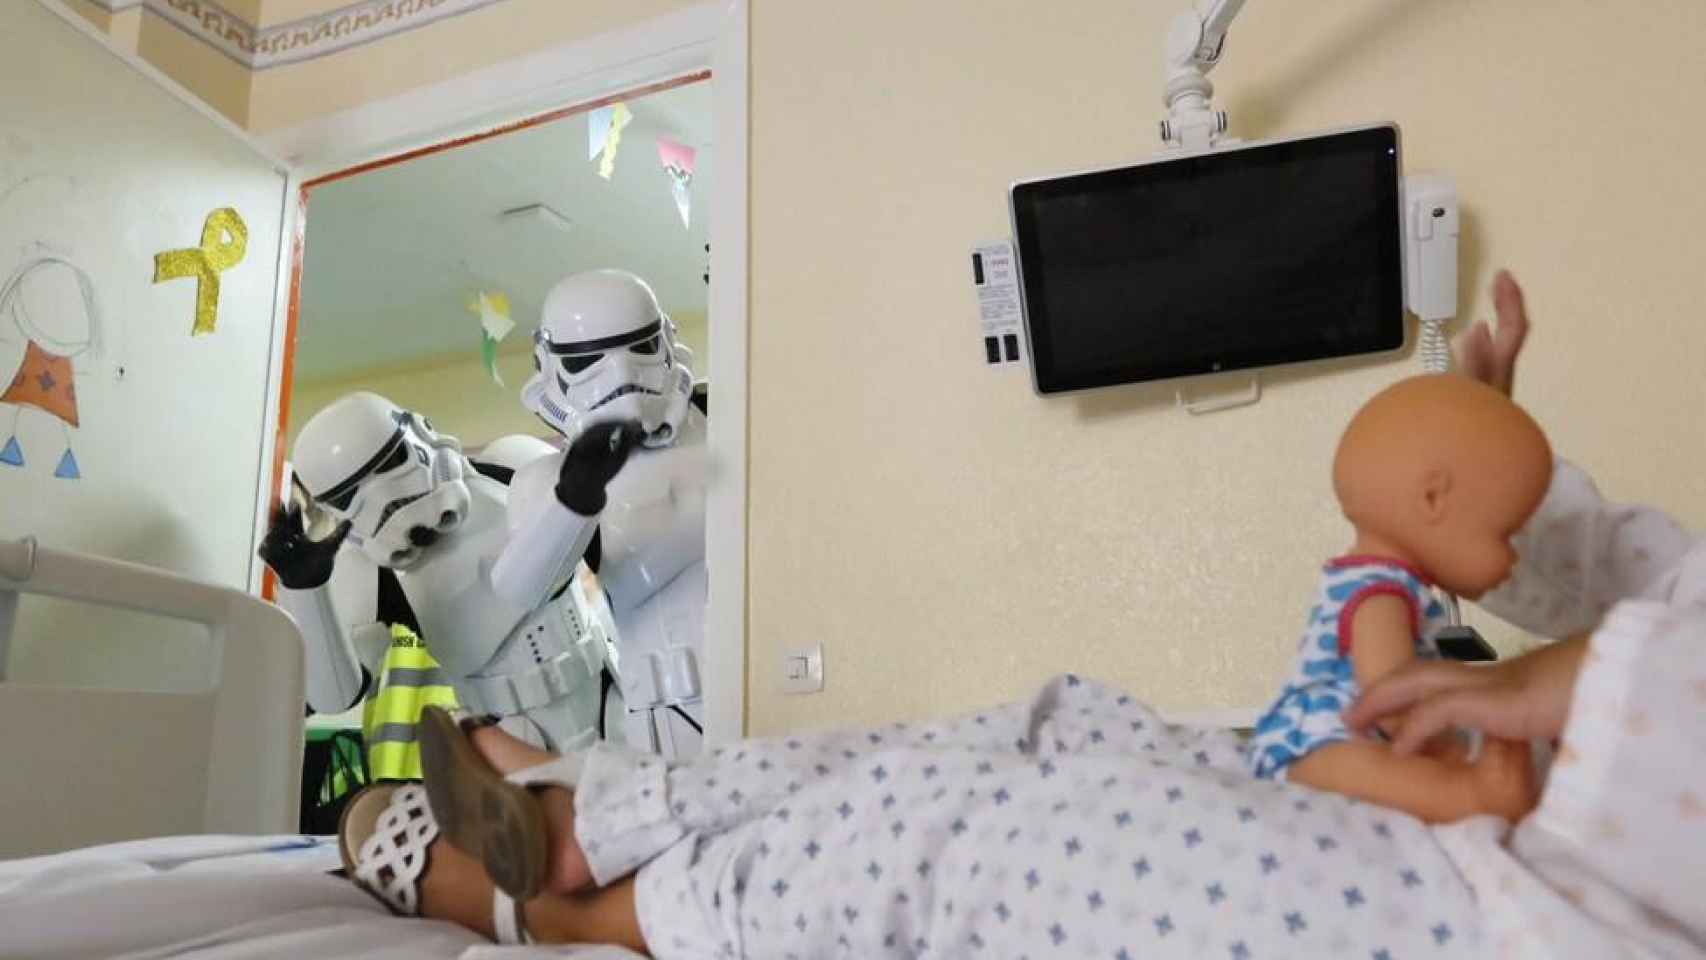 S Star Wars hospital